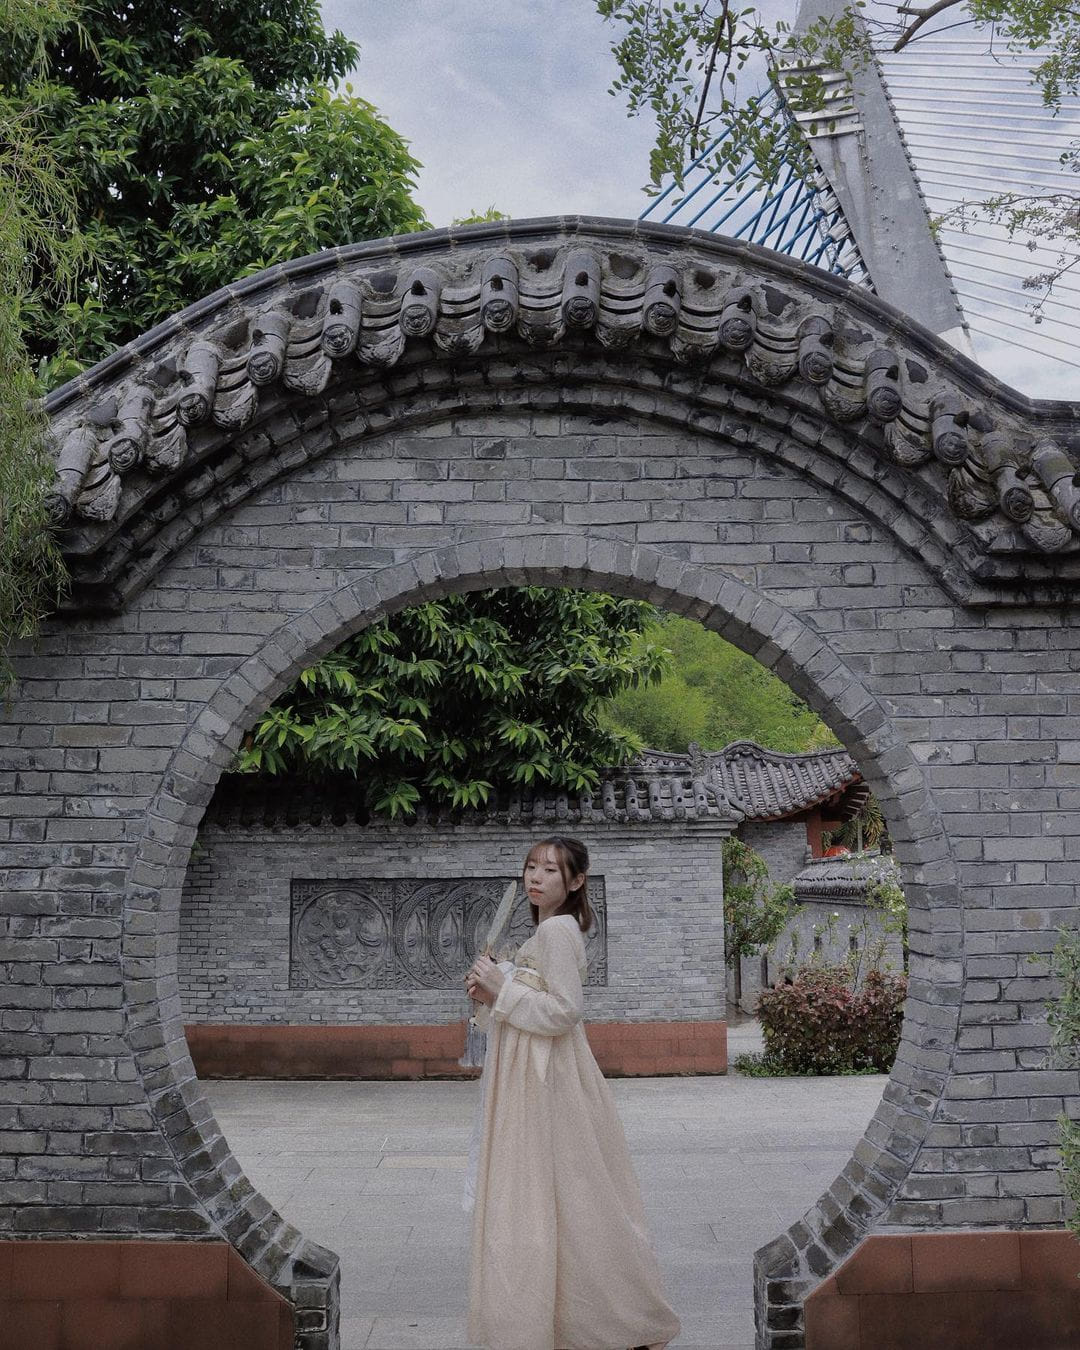 China Malaysia Friendship Garden - moon gate